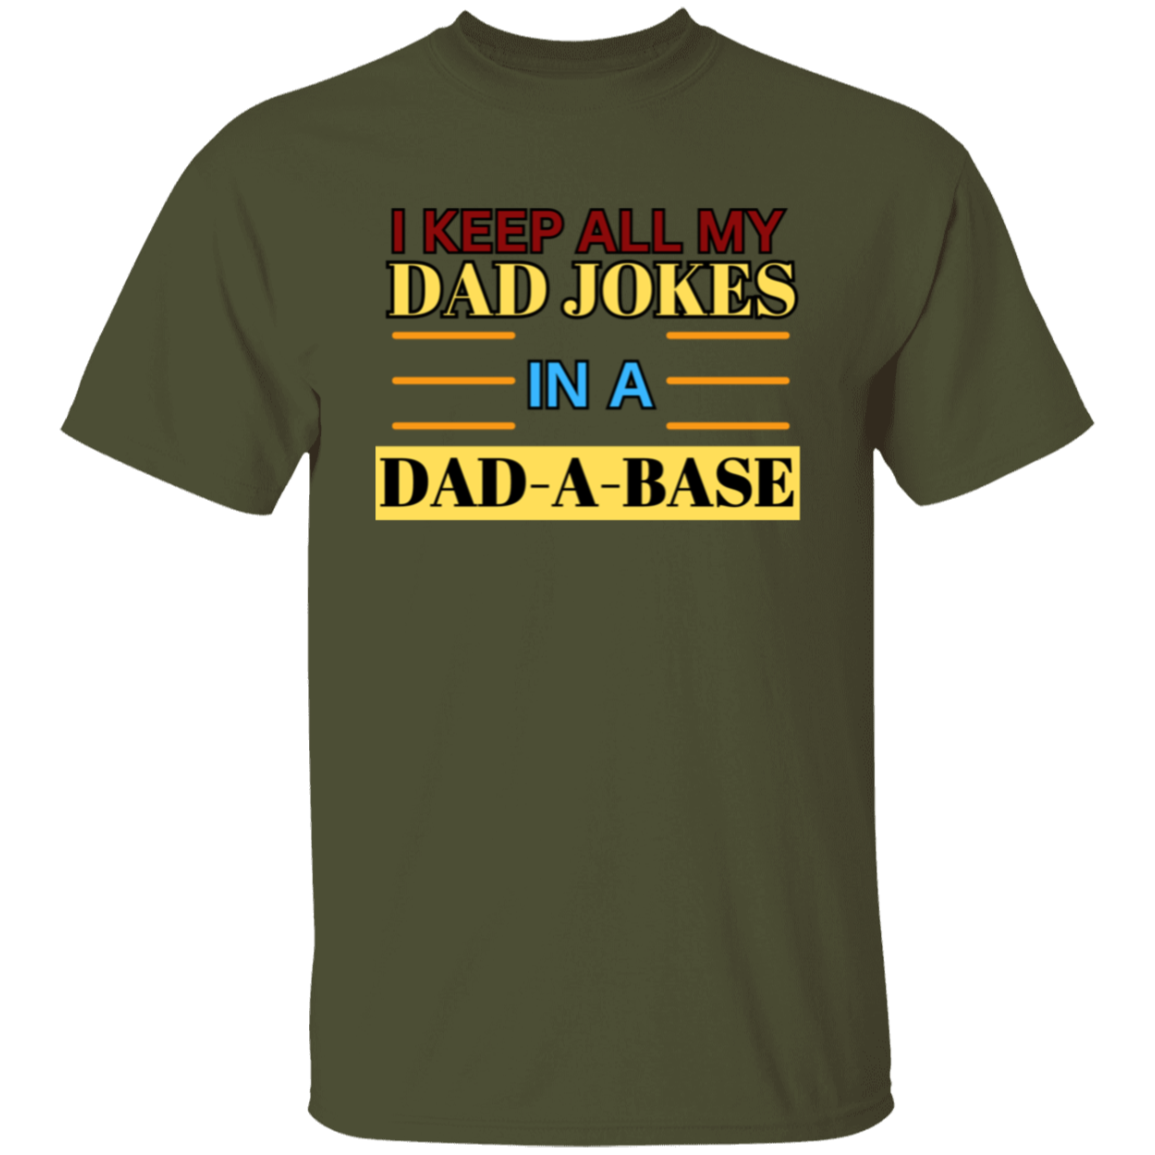 FATHER'S DAY T-SHIRT 5.3 oz. T-Shirt